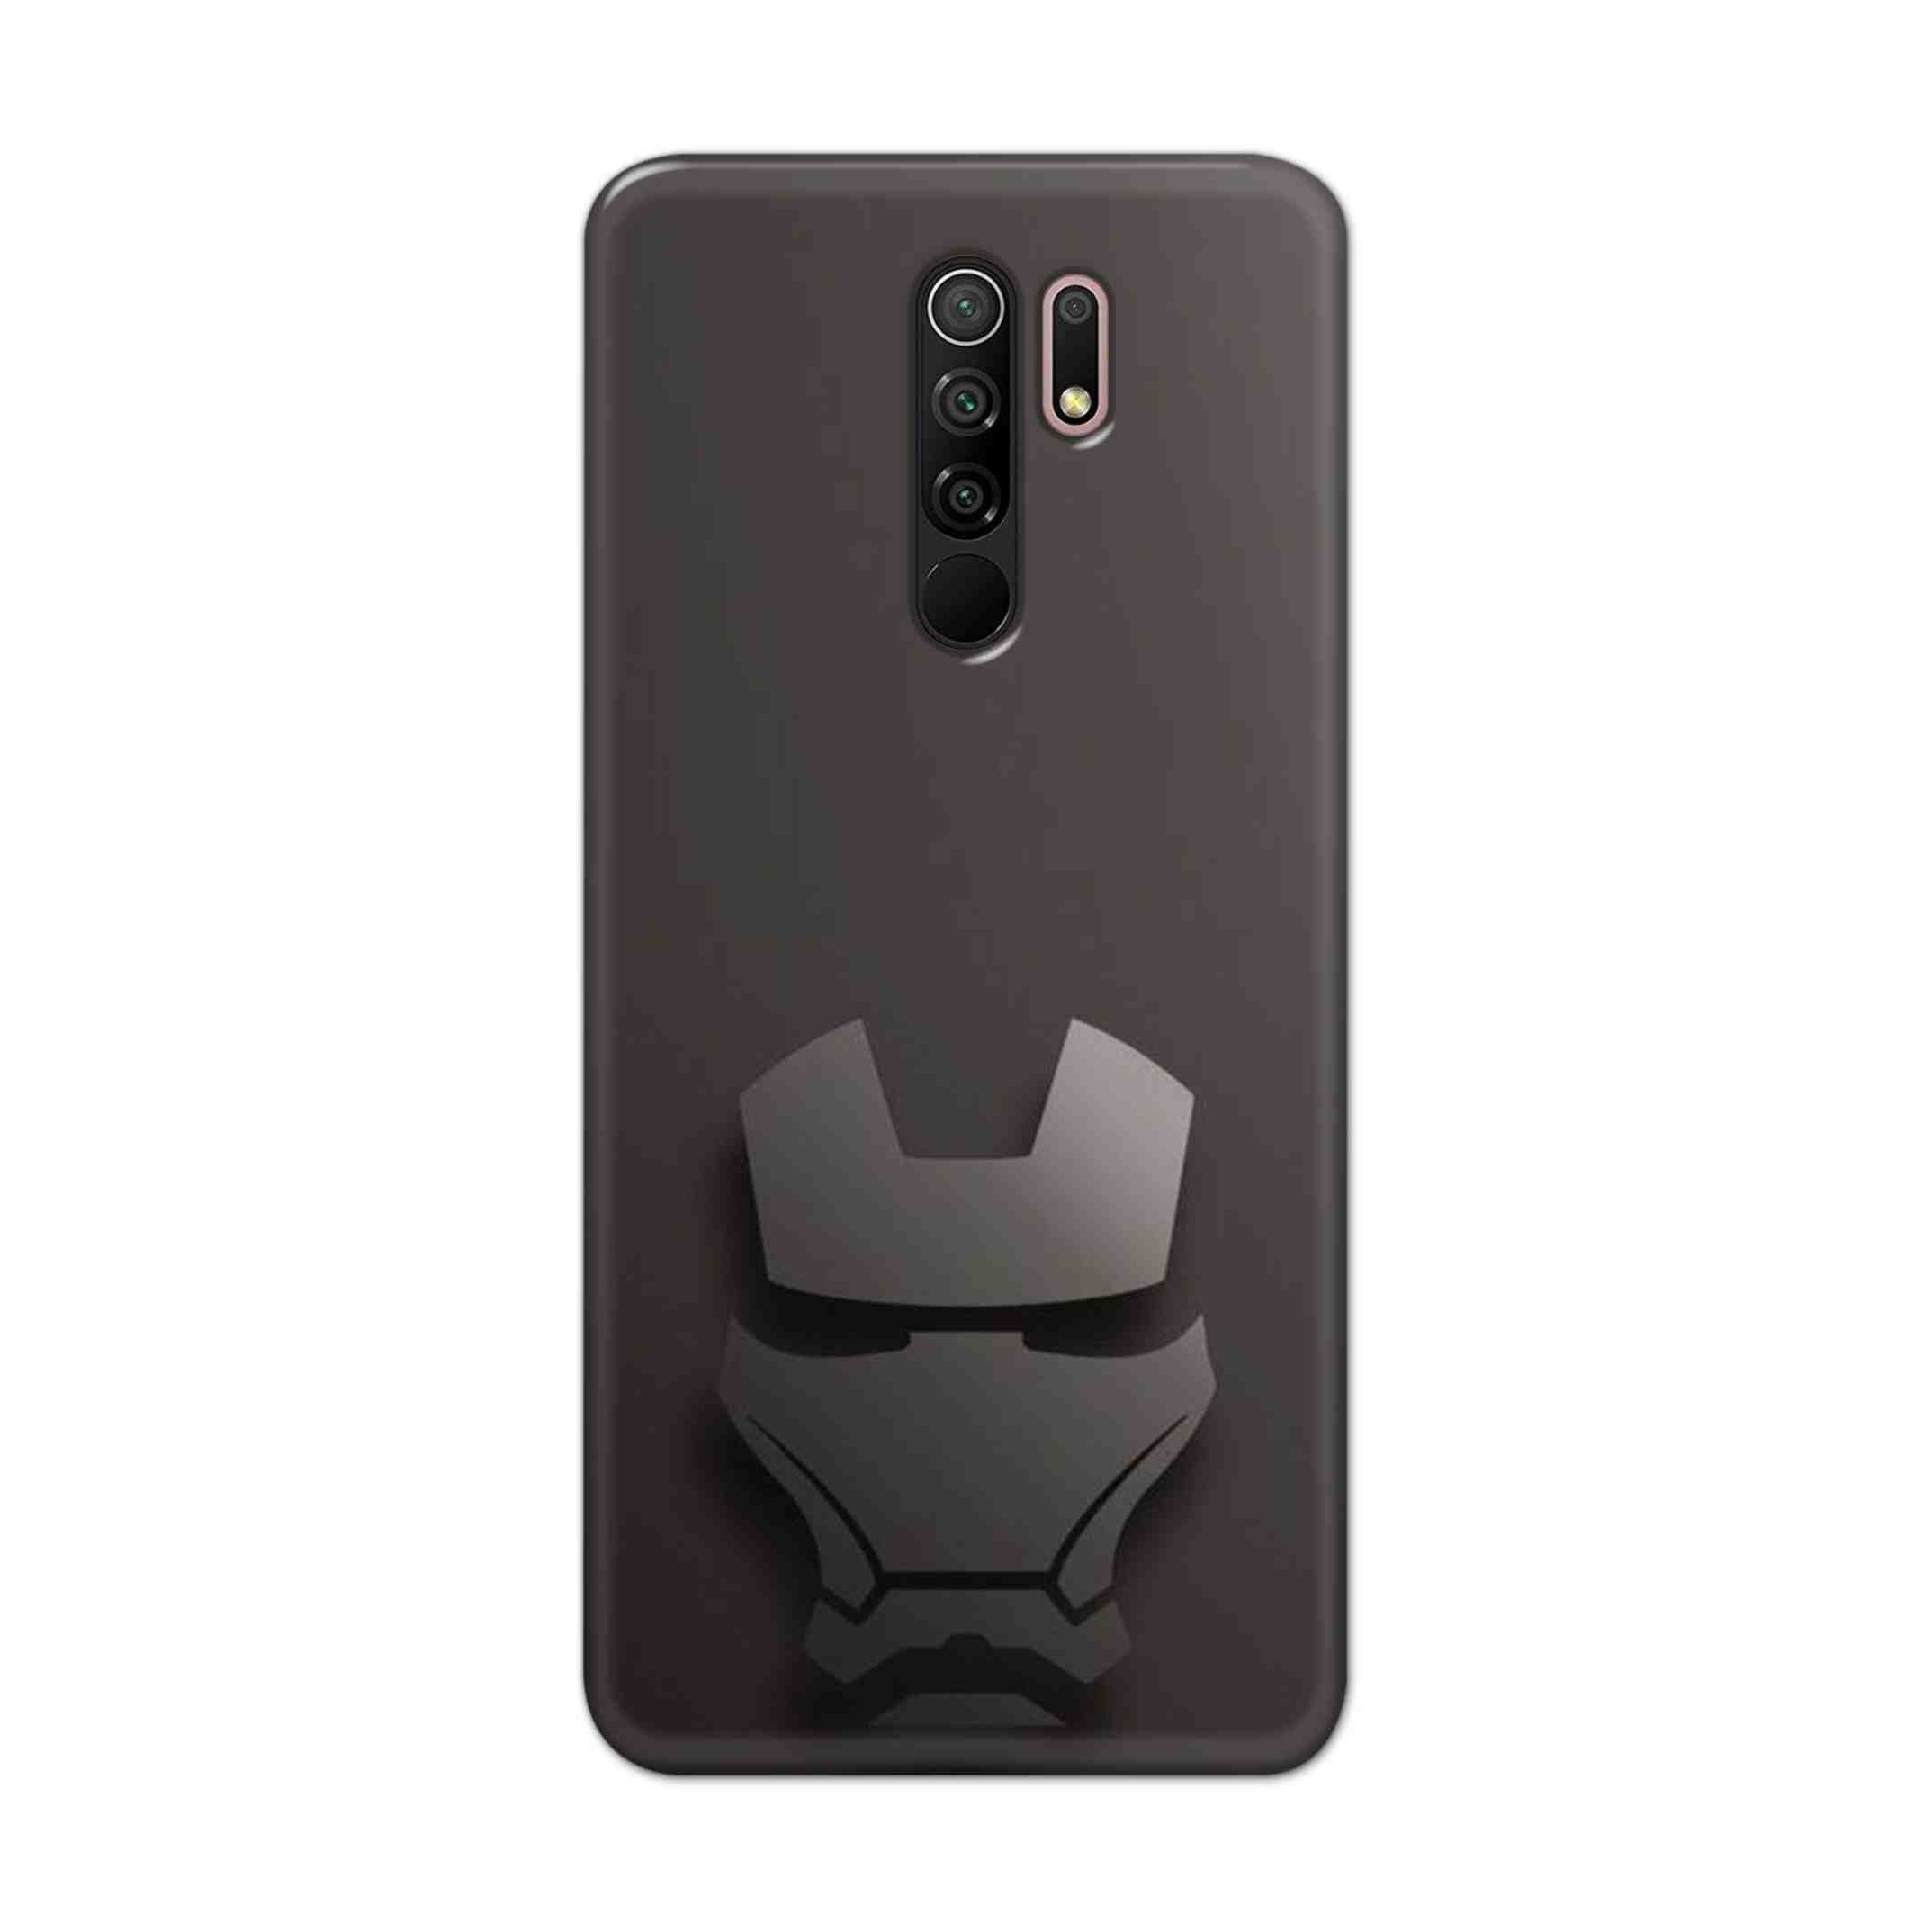 Buy Iron Man Logo Hard Back Mobile Phone Case Cover For Xiaomi Redmi 9 Prime Online